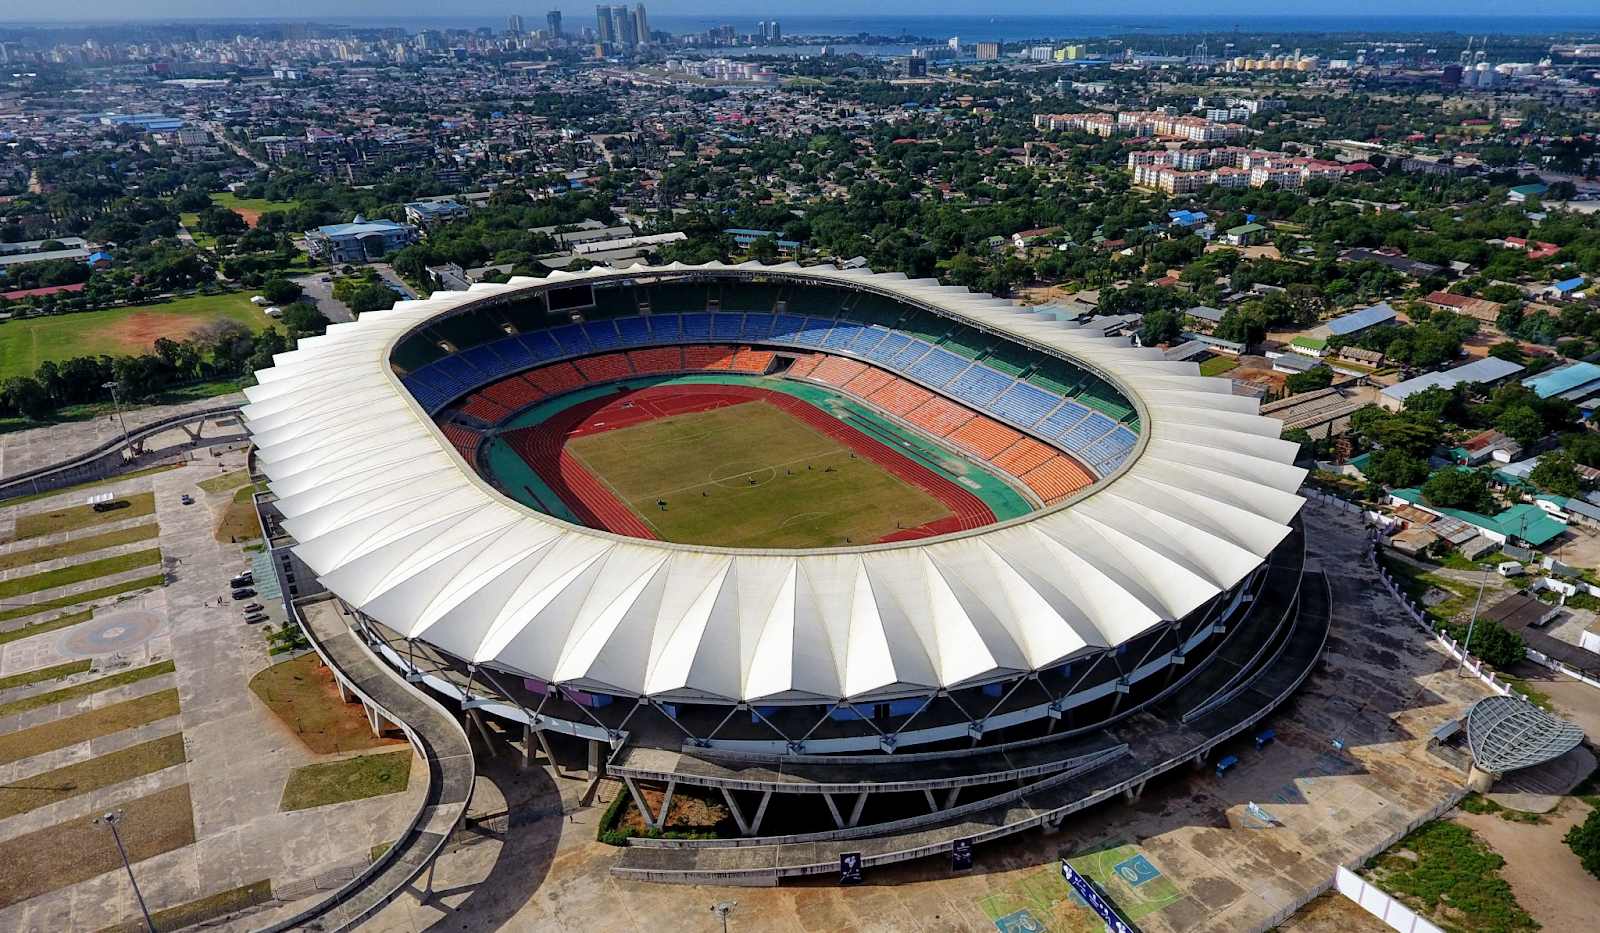 Benjamin Mkapa Stadium in Temeke District, Tanzania